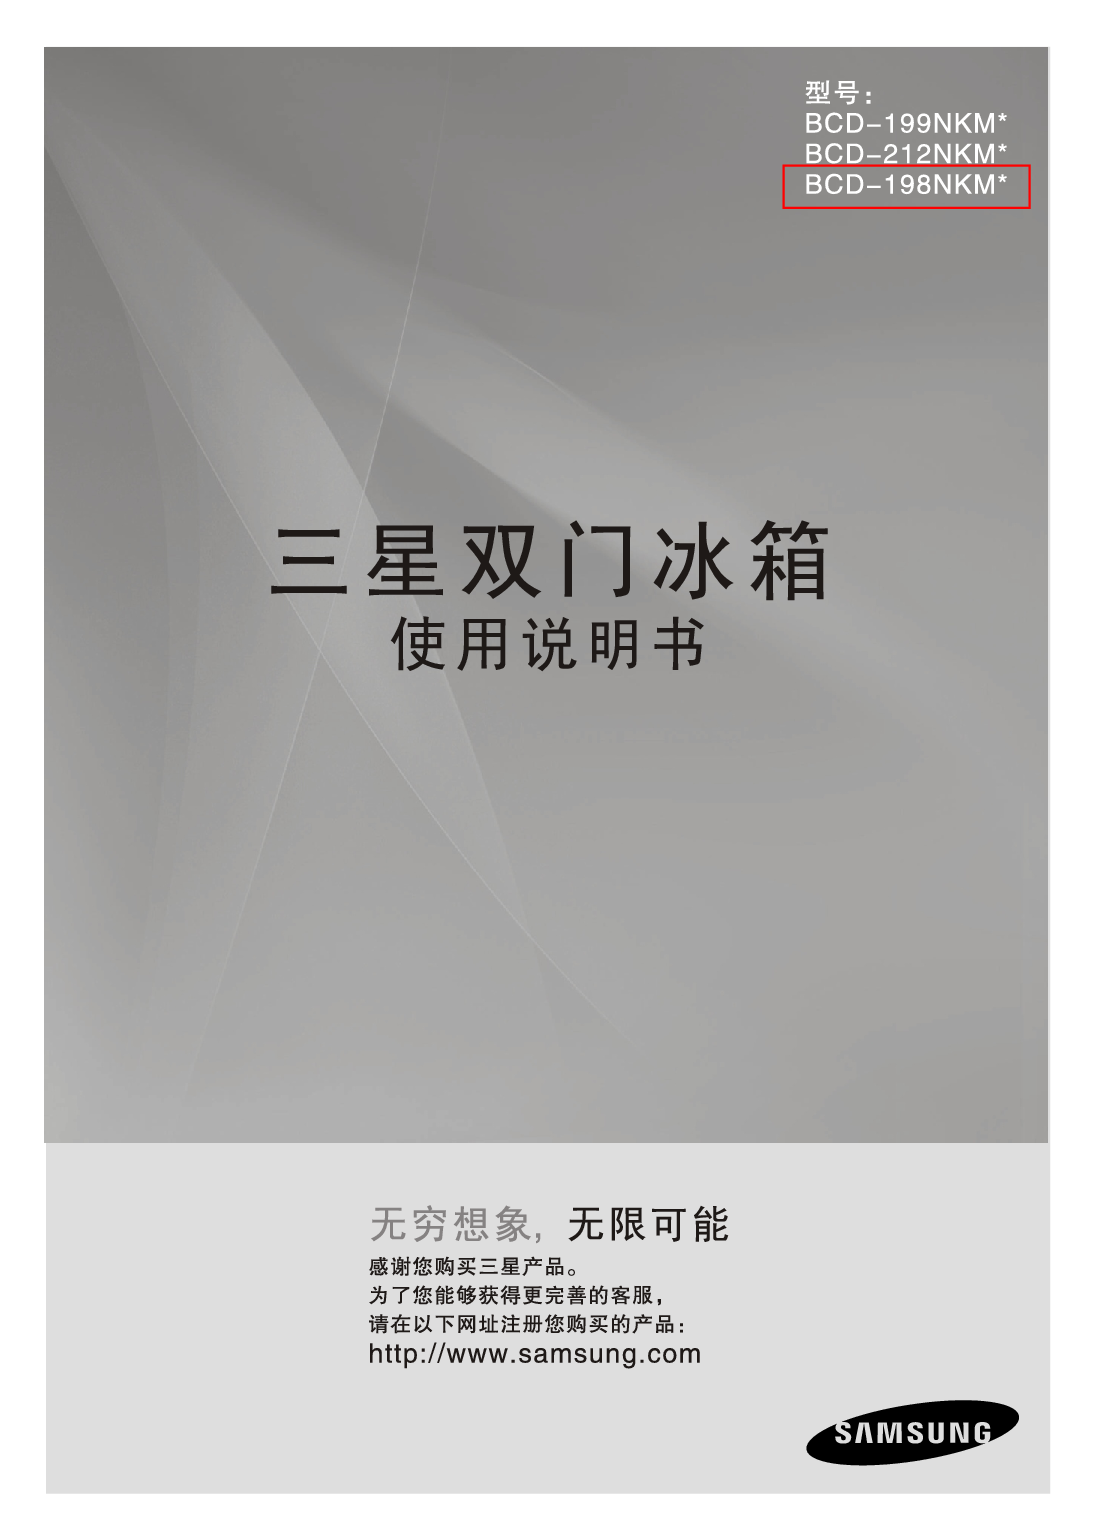 三星 Samsung BCD-198NKM* 使用说明书 封面